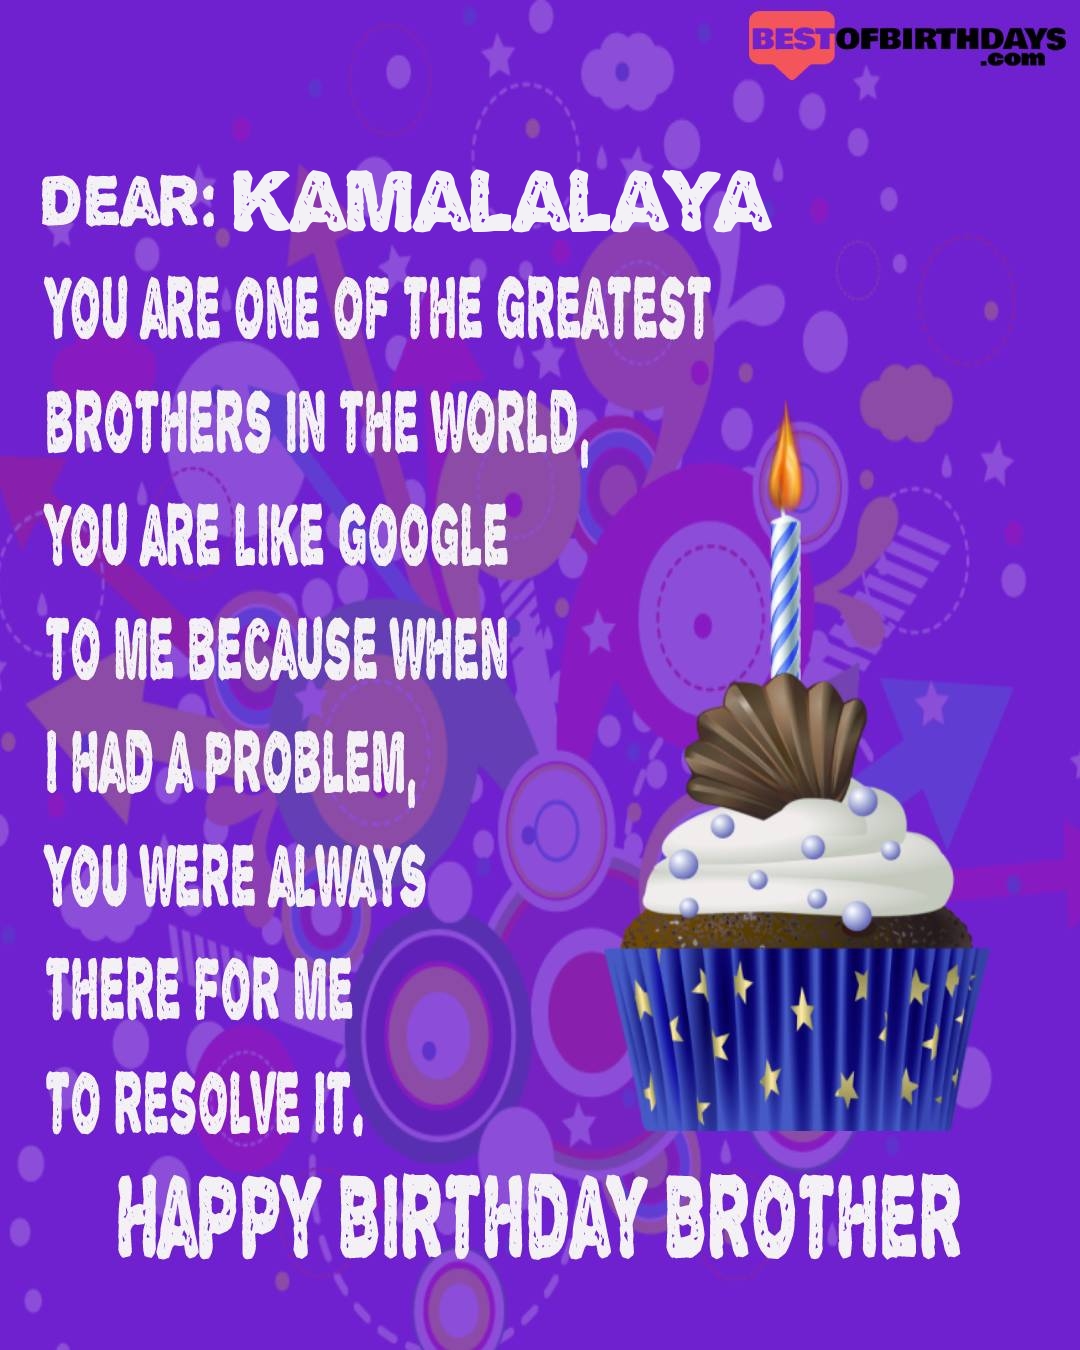 Happy birthday kamalalaya bhai brother bro